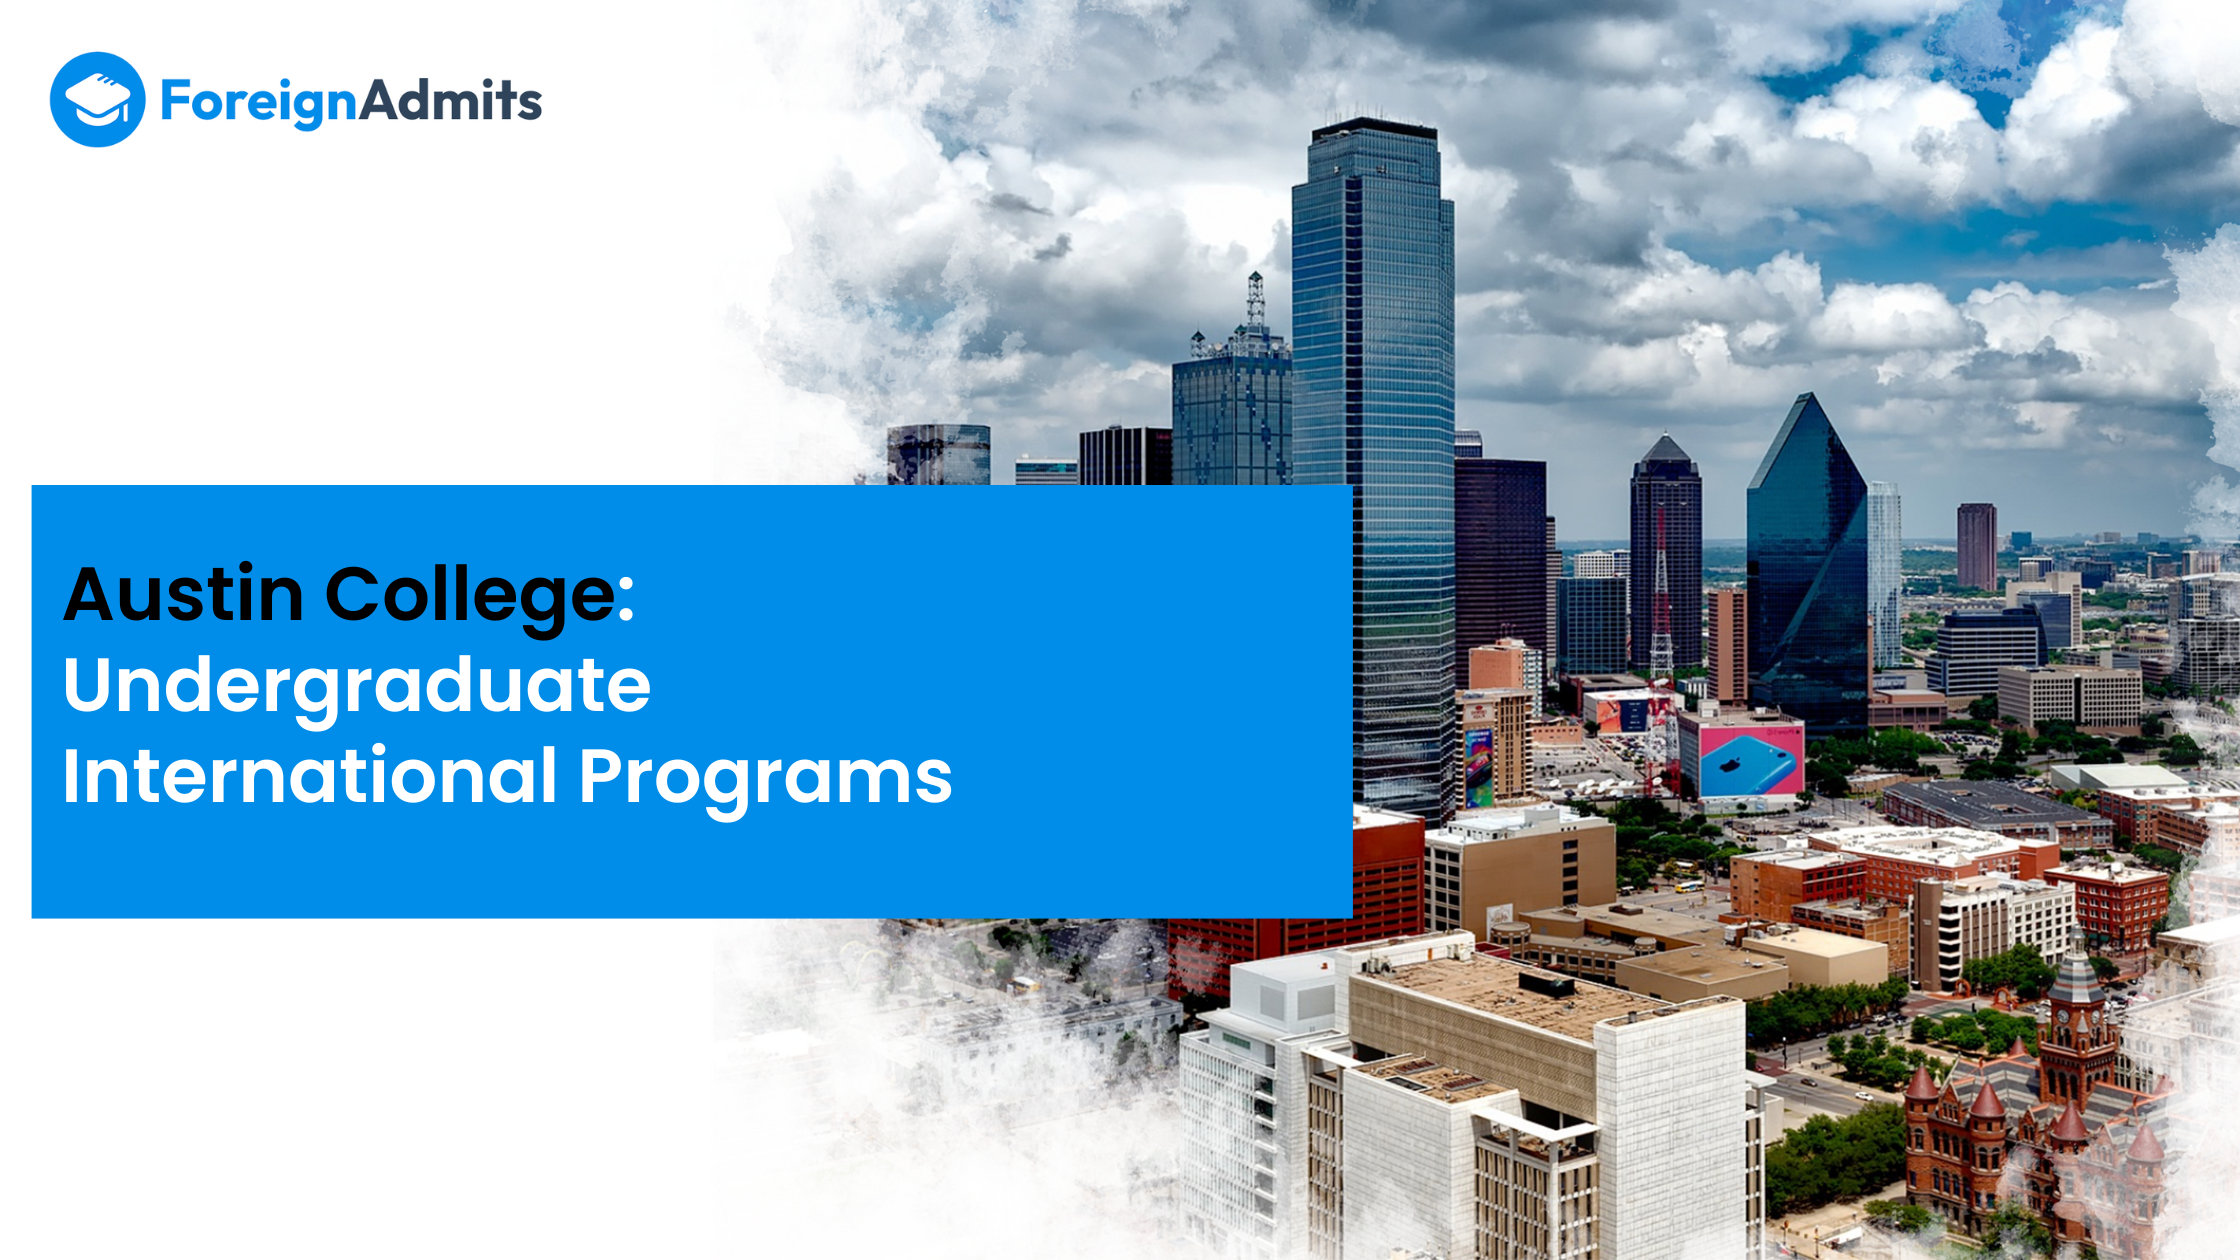 Austin college: Undergraduate International Programs